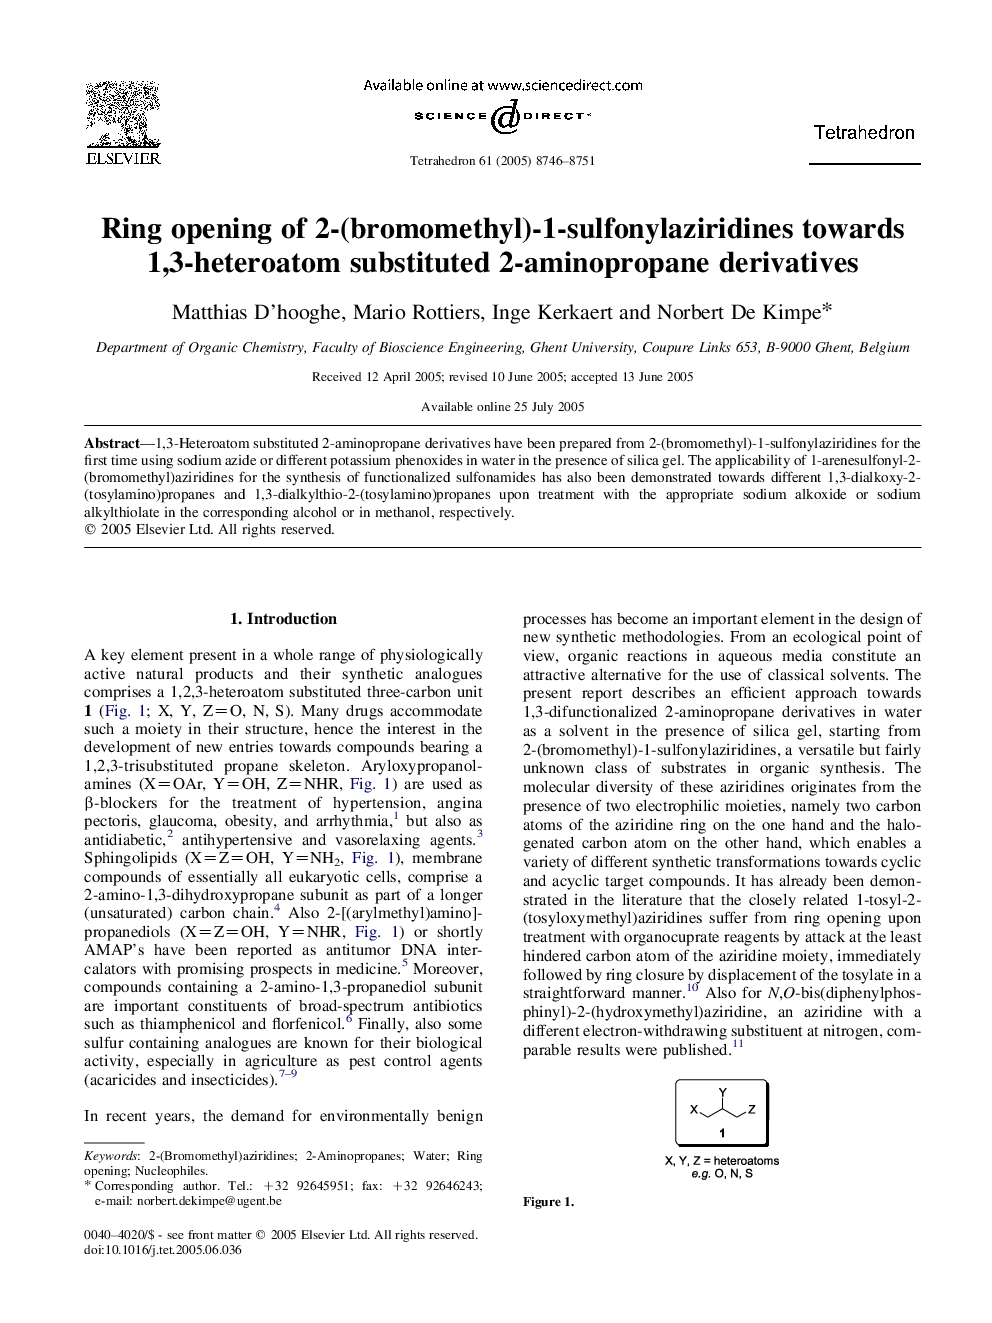 Ring opening of 2-(bromomethyl)-1-sulfonylaziridines towards 1,3-heteroatom substituted 2-aminopropane derivatives